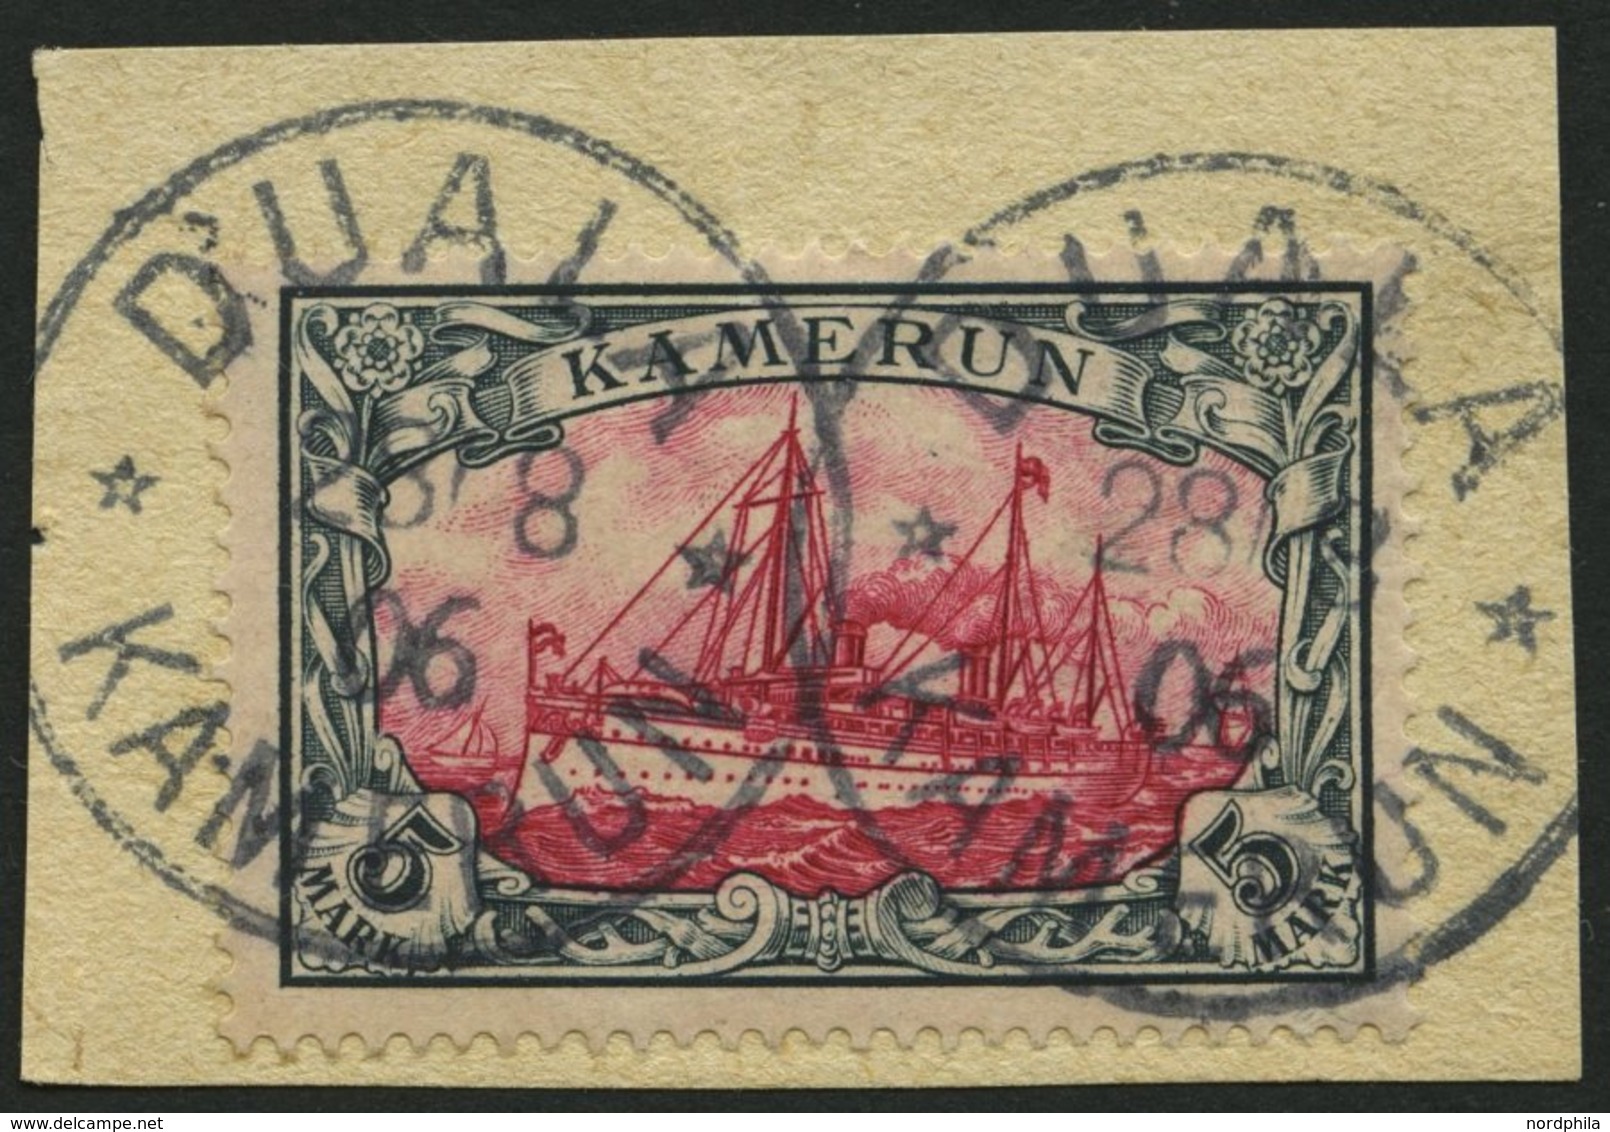 KAMERUN 19 BrfStk, 1900, 5 M. Grünschwarz/rot, Ohne Wz., Stempel DUALA, Prachtbriefstück, Mi. (600.-) - Camerún